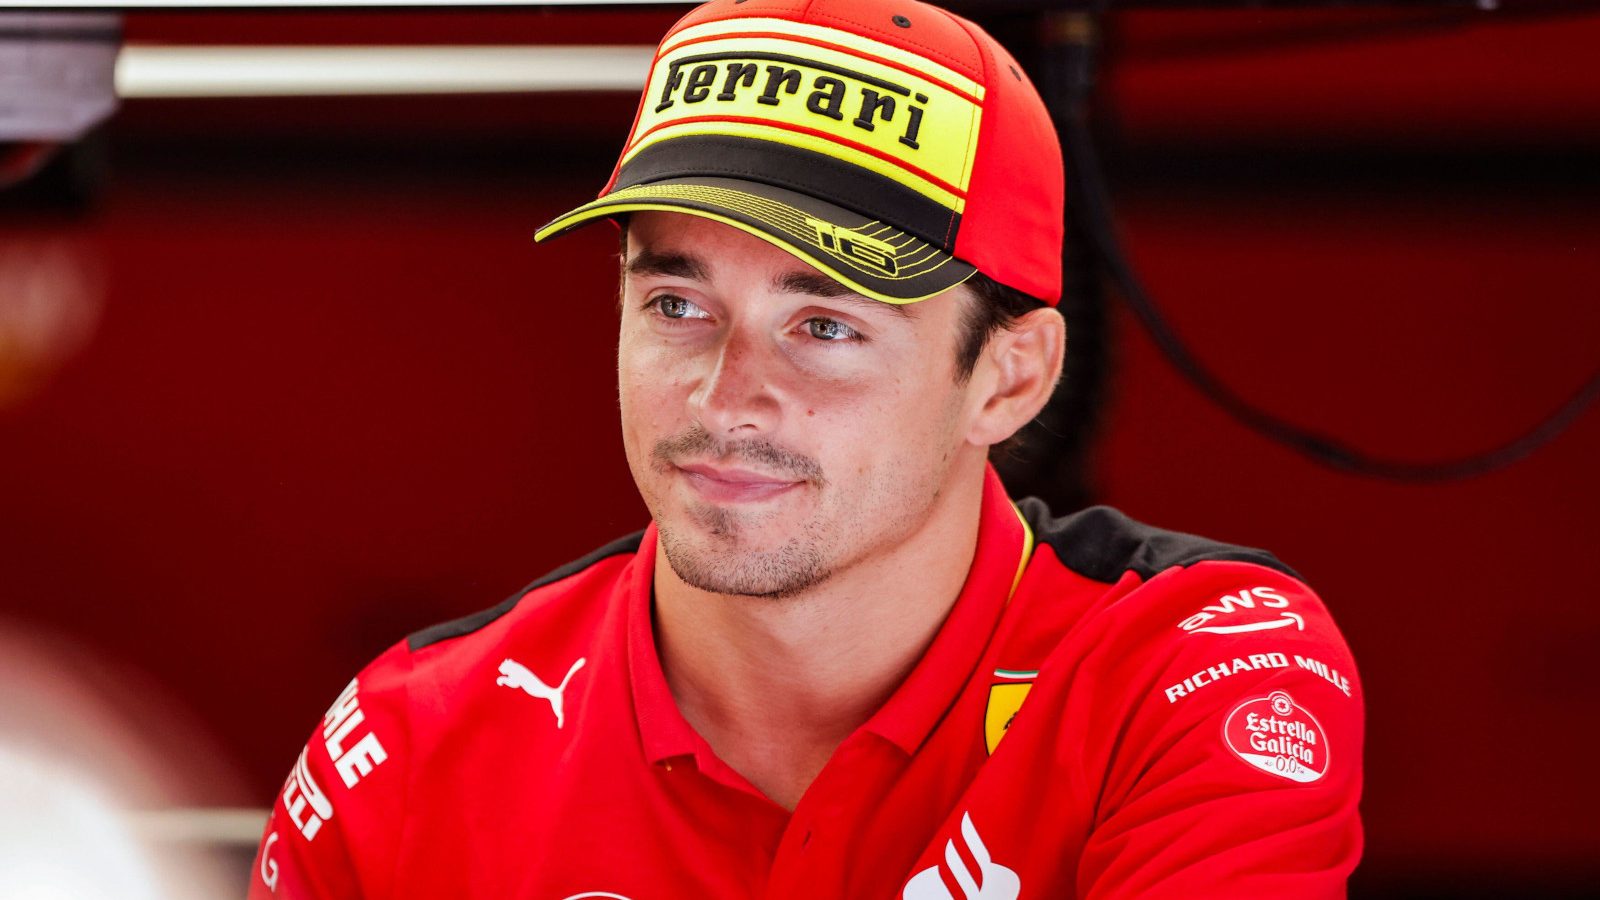 Charles Leclerc smiling in the Ferrari garage as he prepares for the Italian Grand Prix weekend.